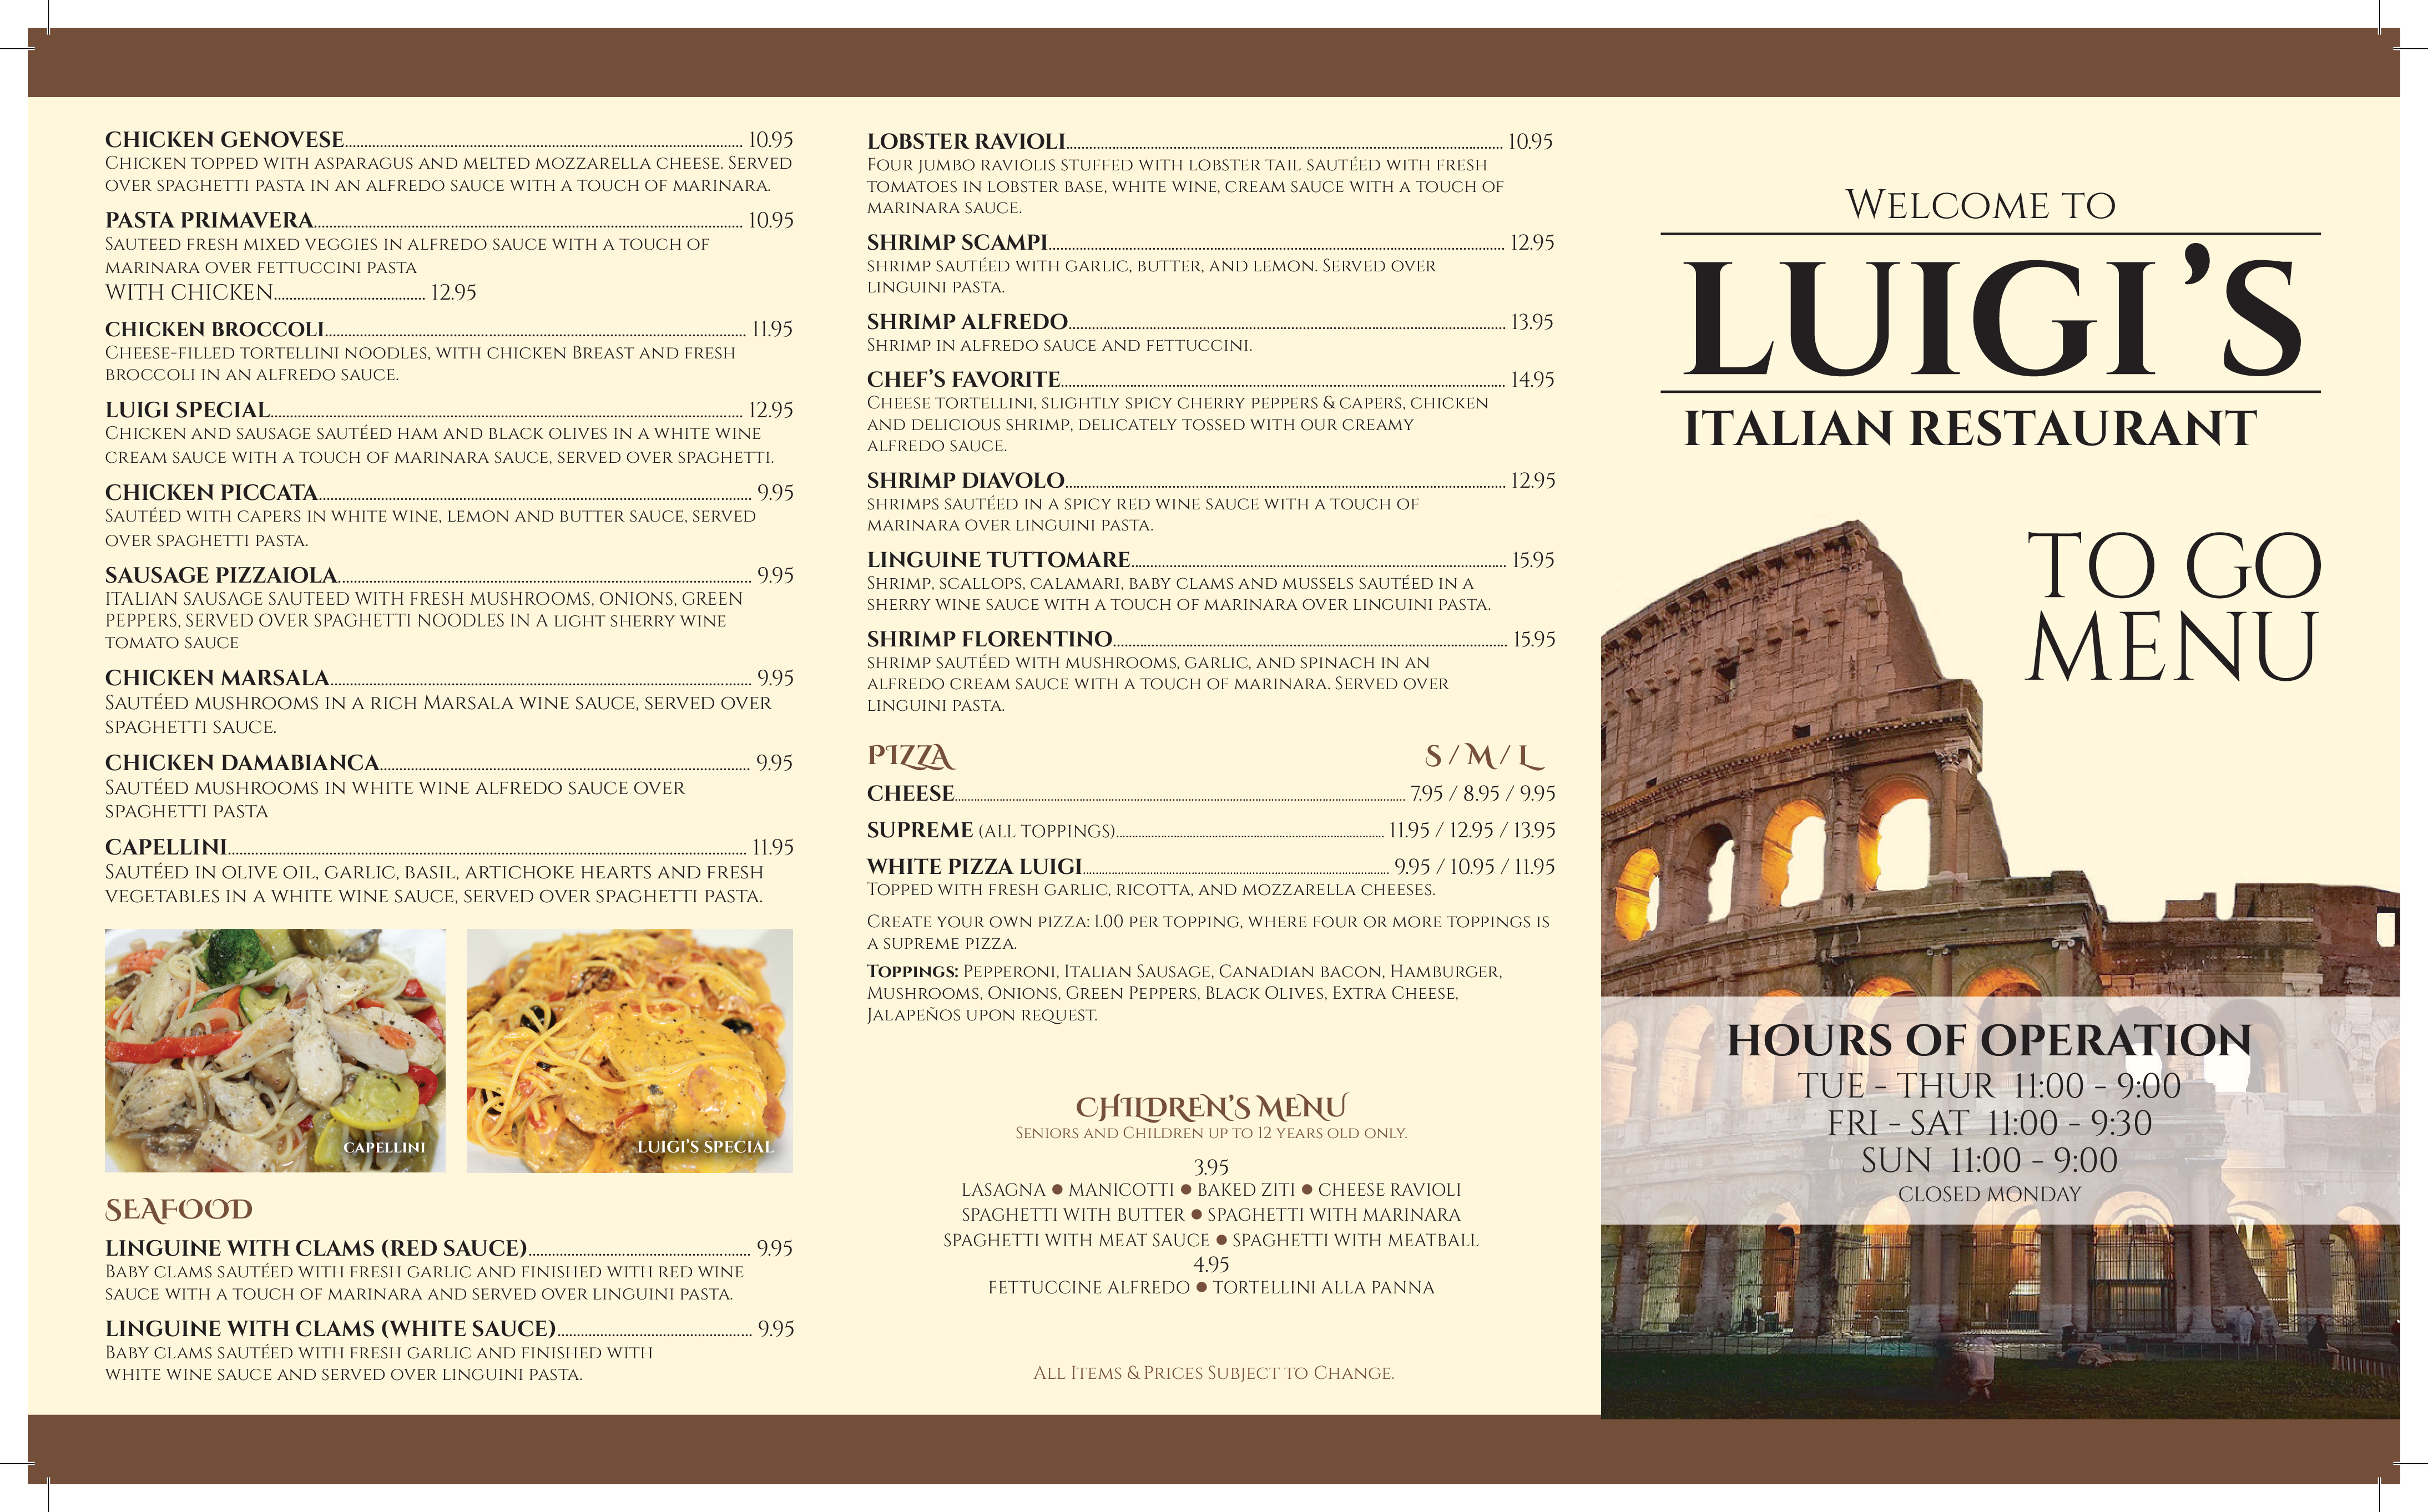 Luigi's Italian Restaurant Menu - Urbanspoon/Zomato